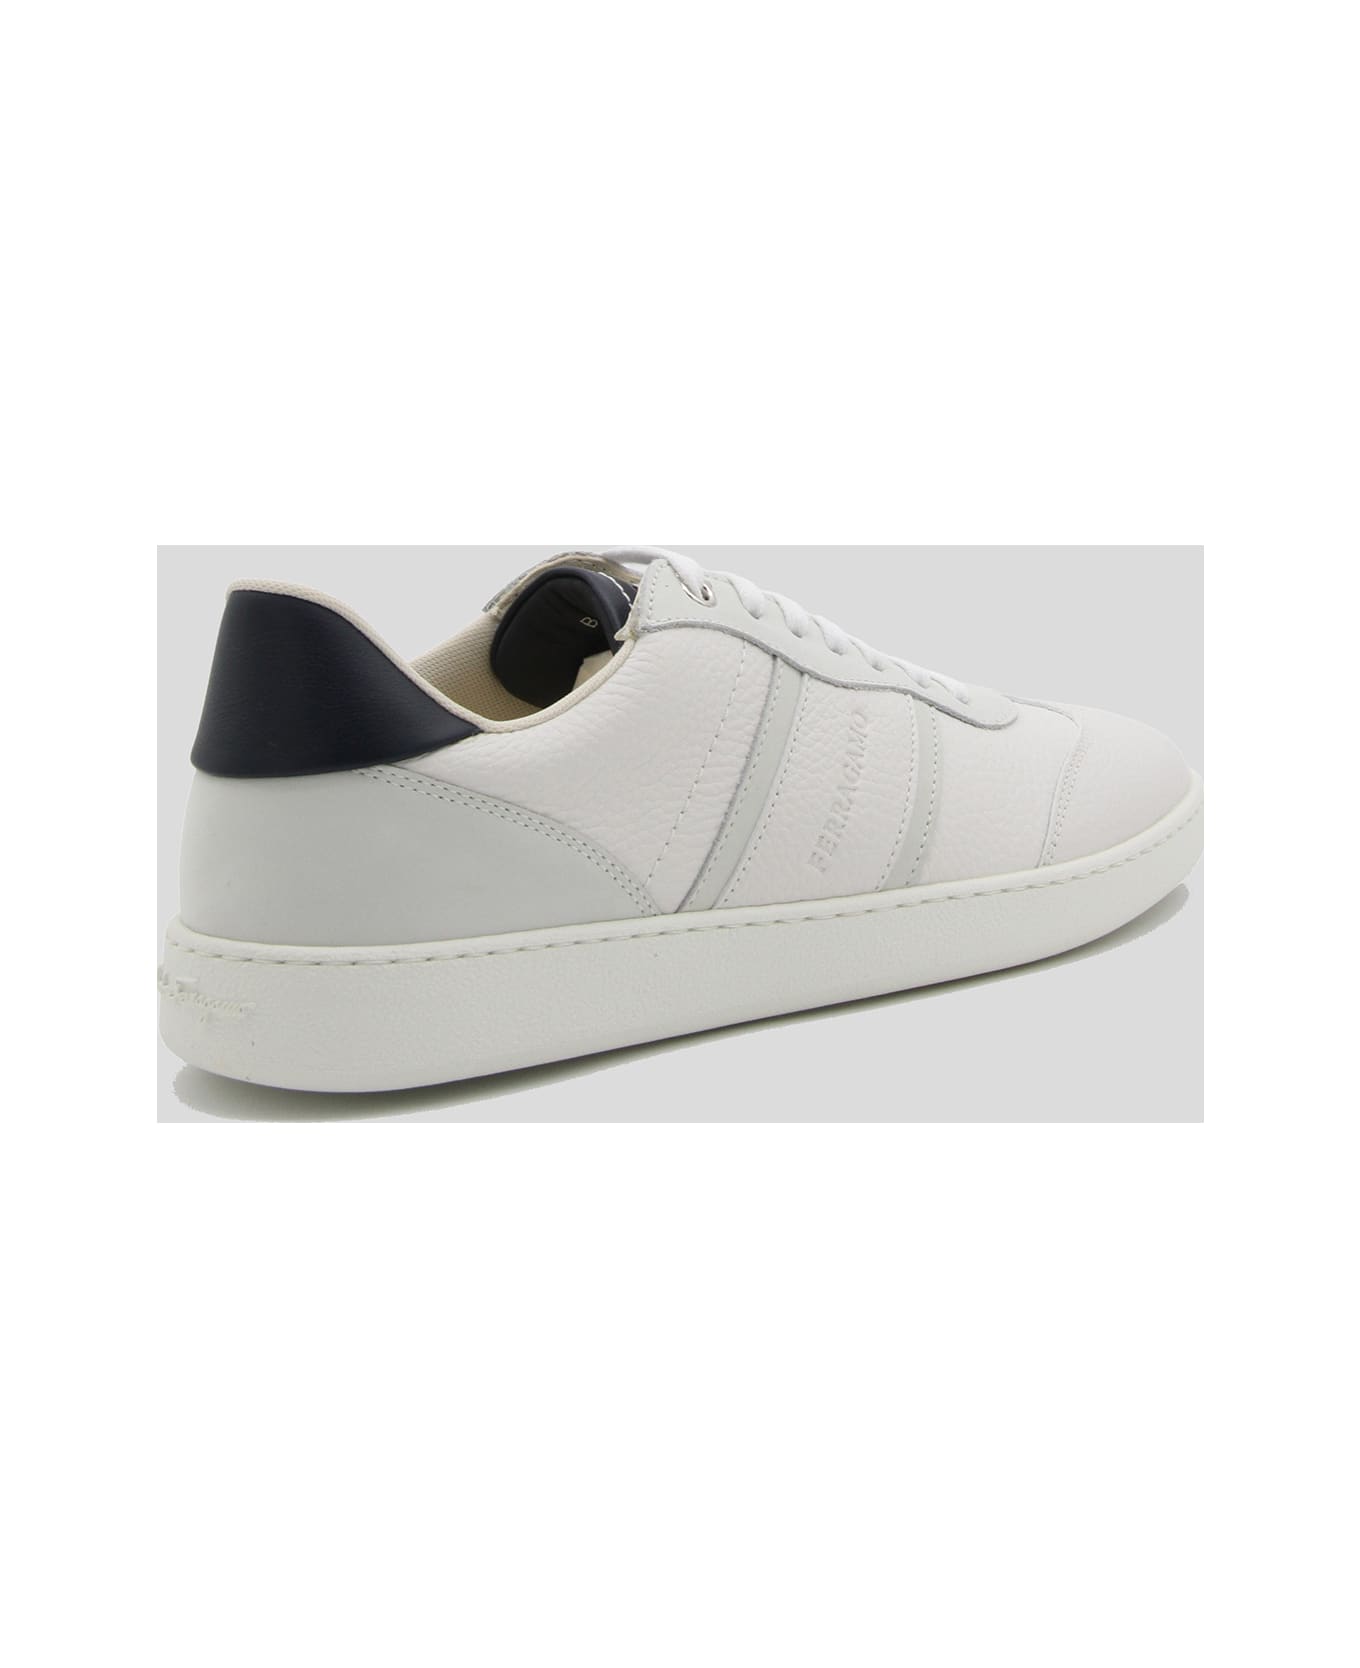 Ferragamo White Leather Sneakers スニーカー